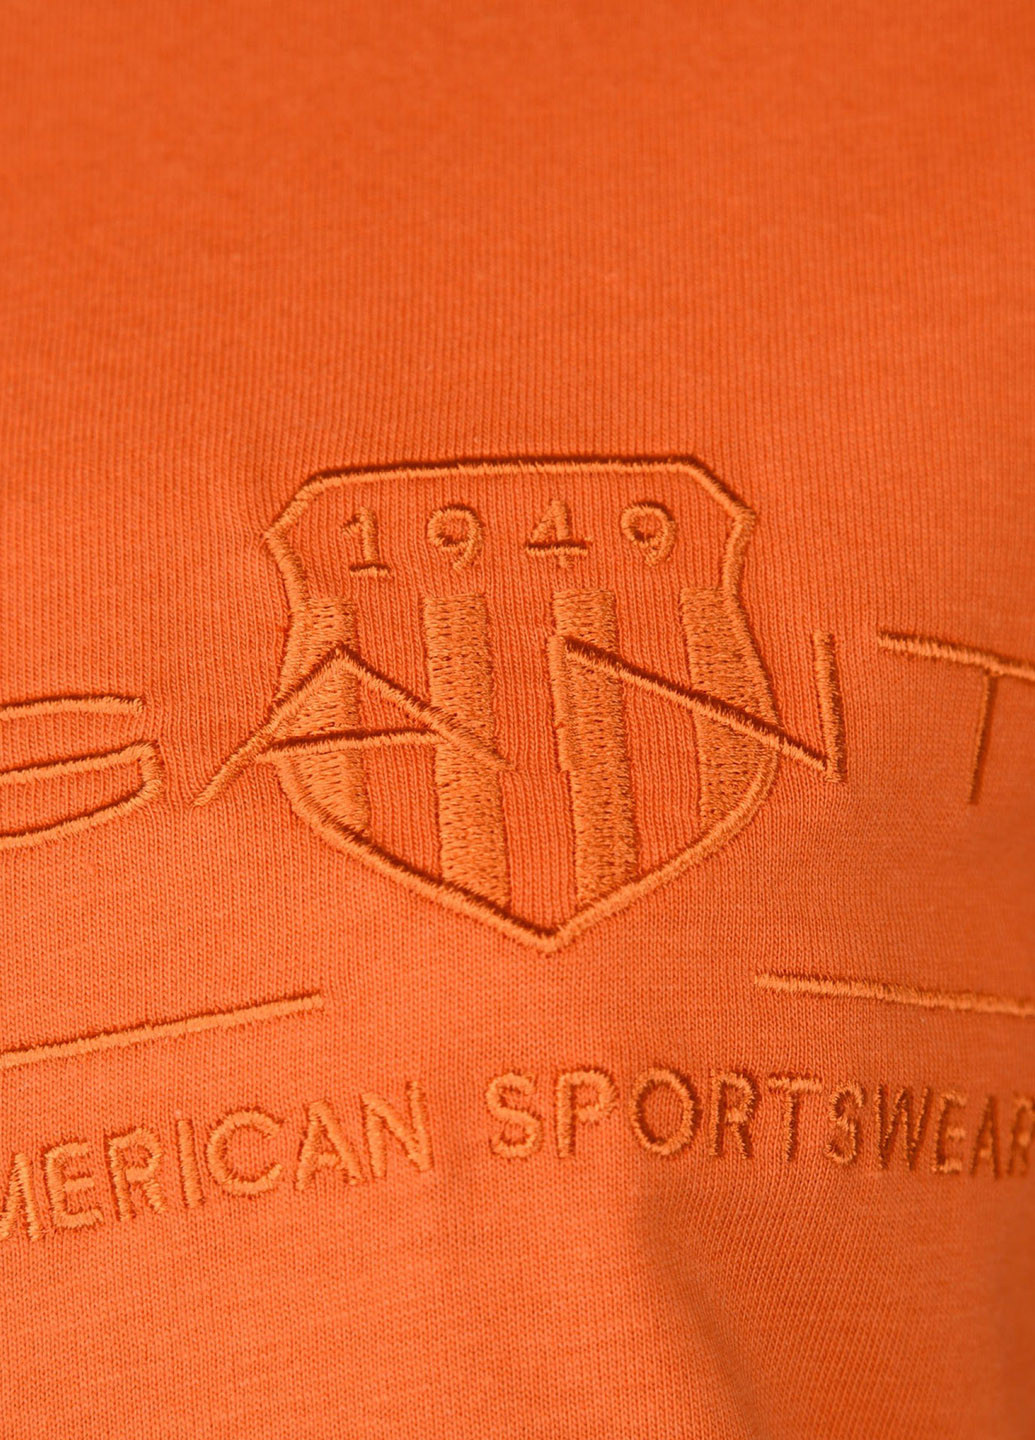 Оранжевая летняя футболка Gant